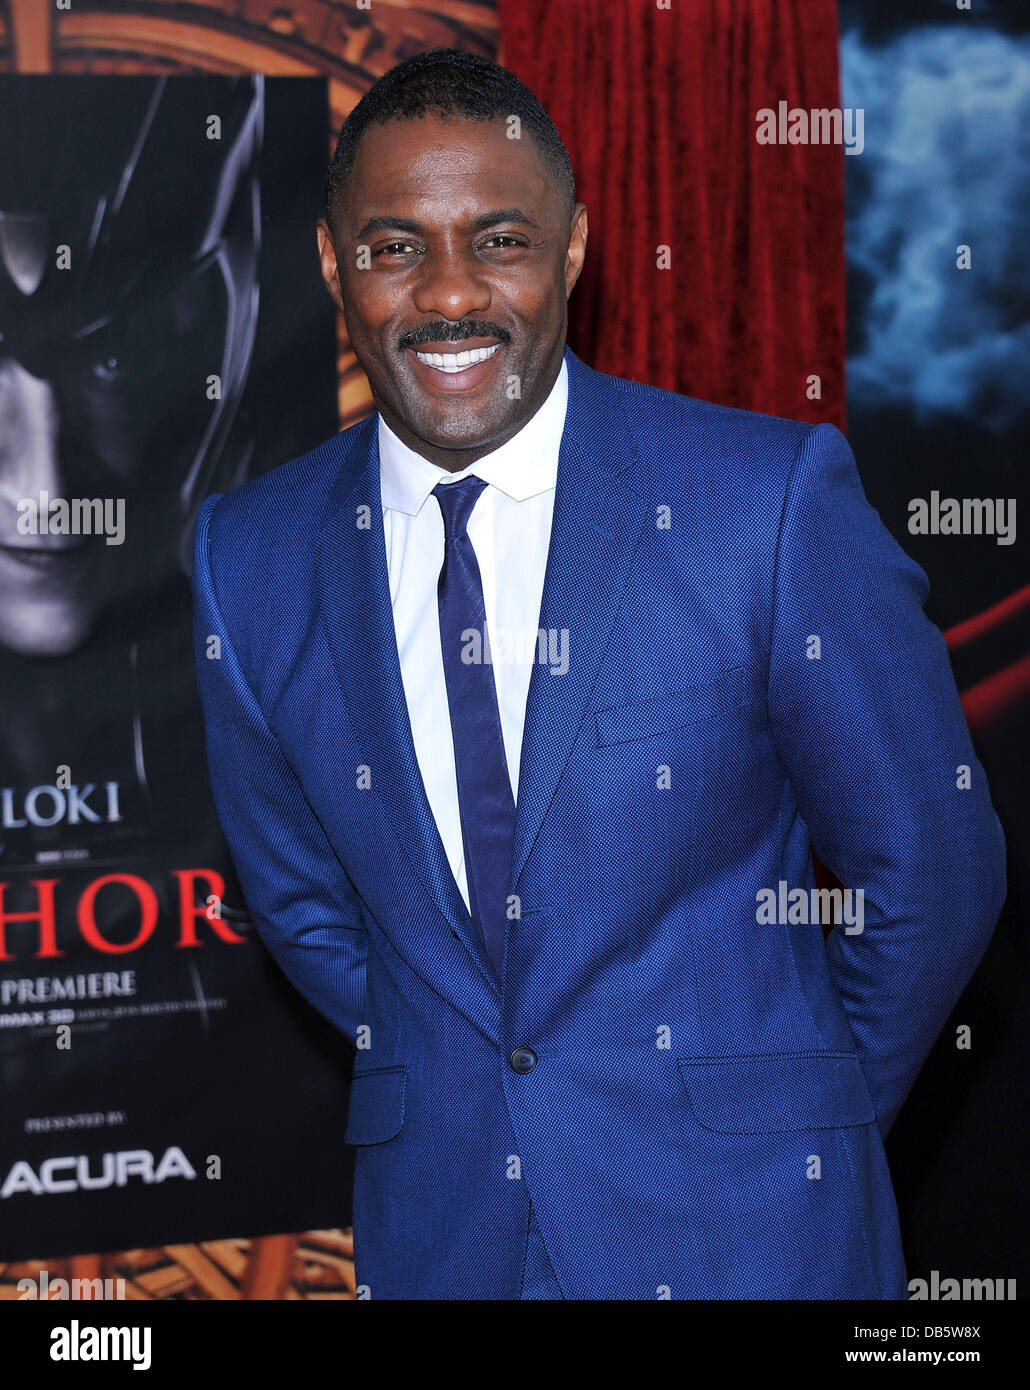 Idris Elba Los Angeles premiere of 'Thor' held at the El Capitan Theatre - Arrivals Hollywood, California - 02.05.11 Stock Photo